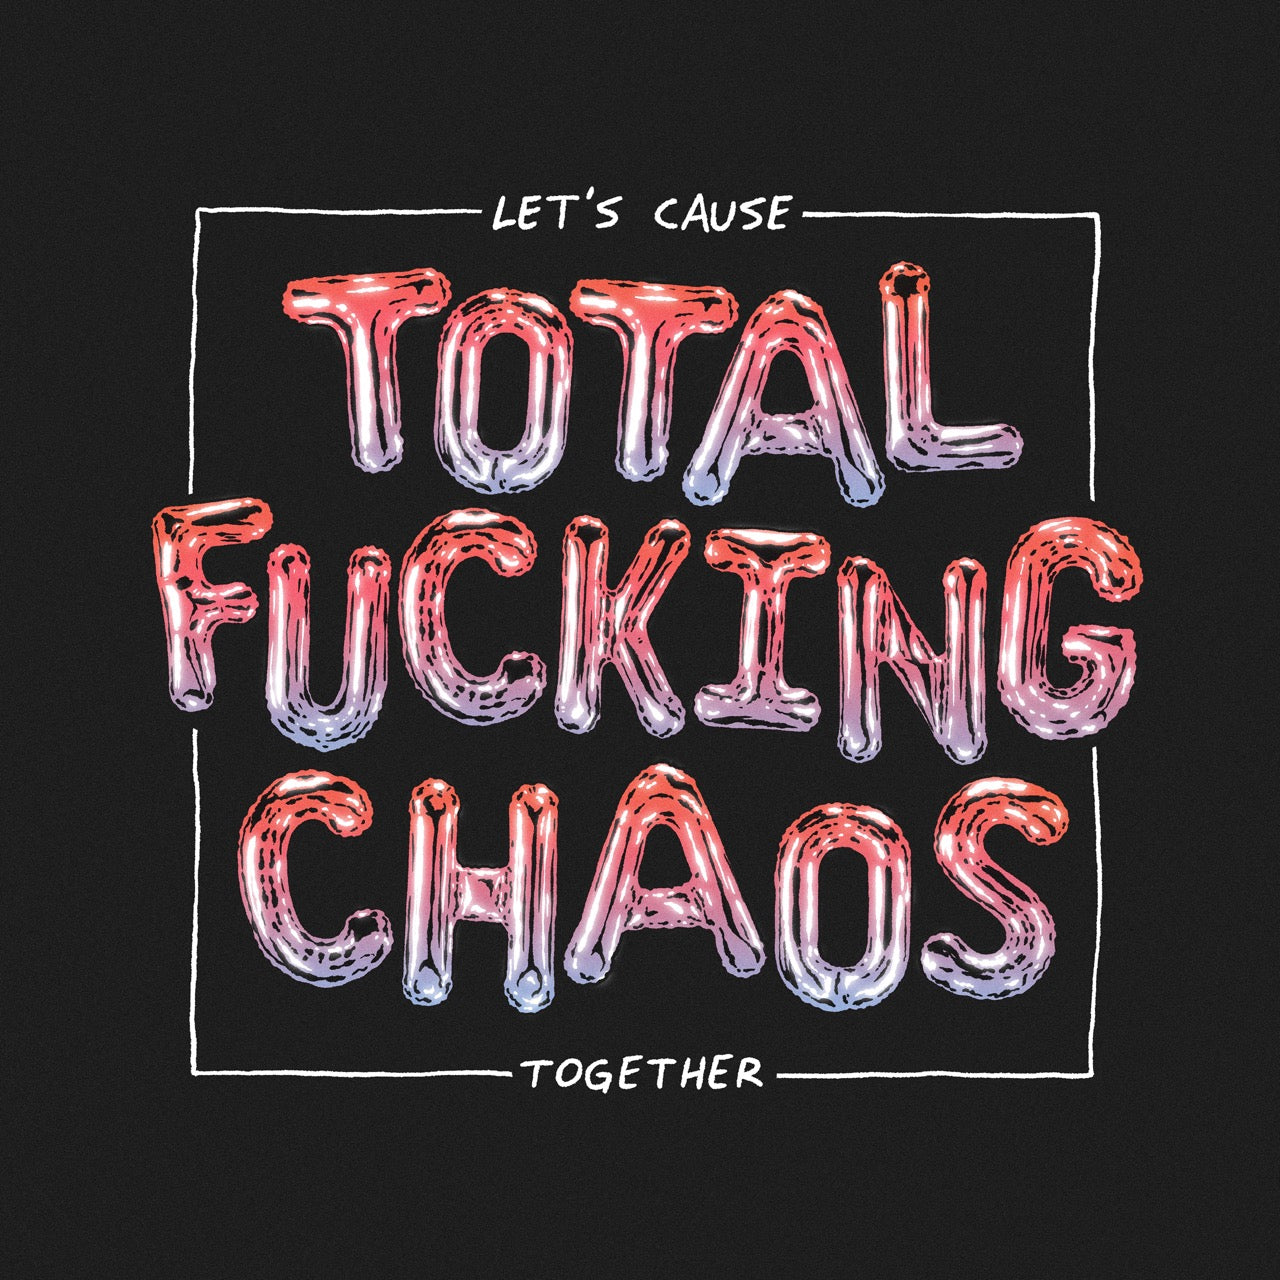 Chaos - whatsalexdrawn